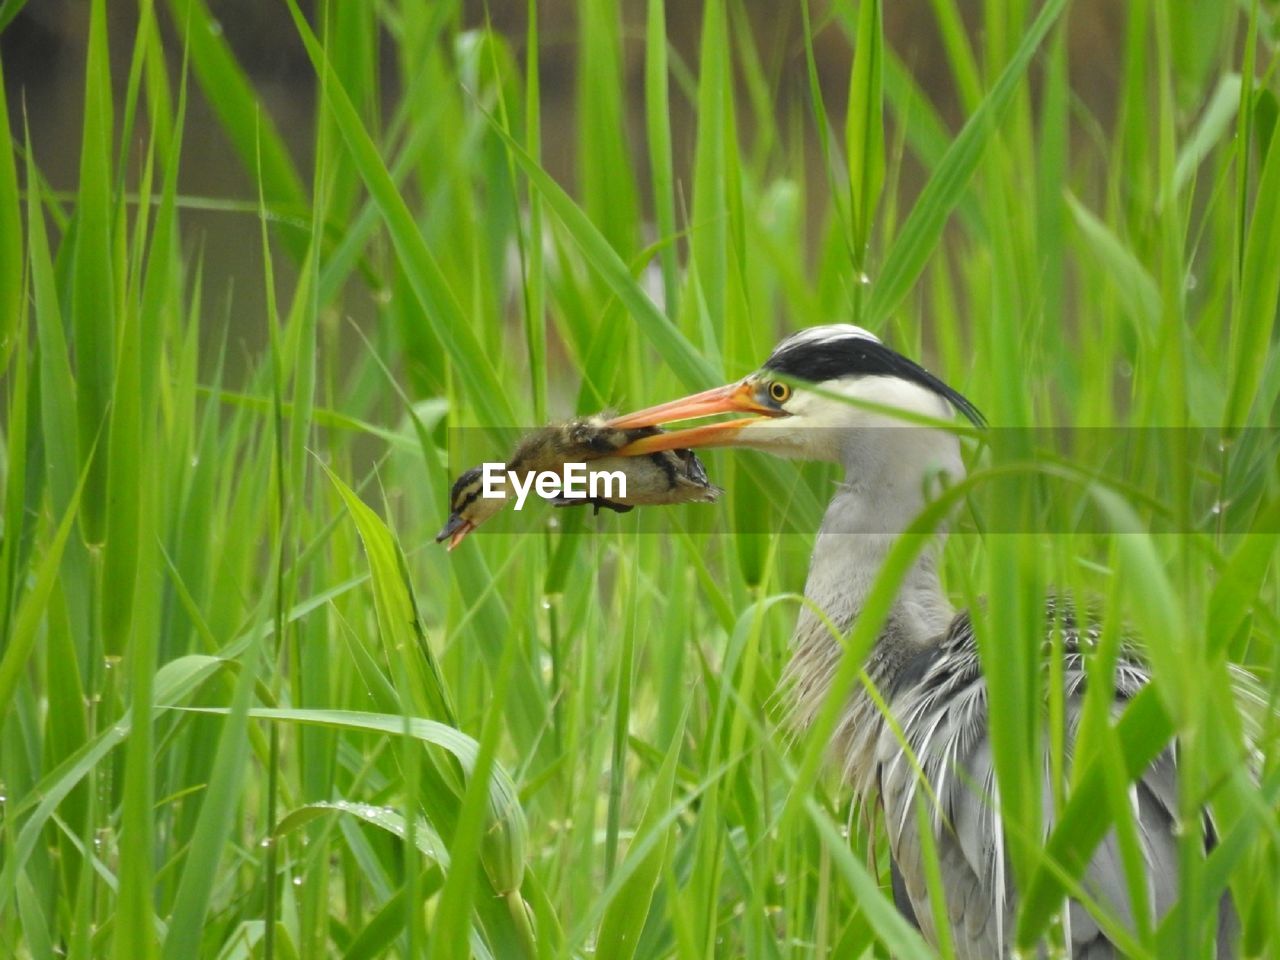 VIEW OF A BIRD IN GRASS